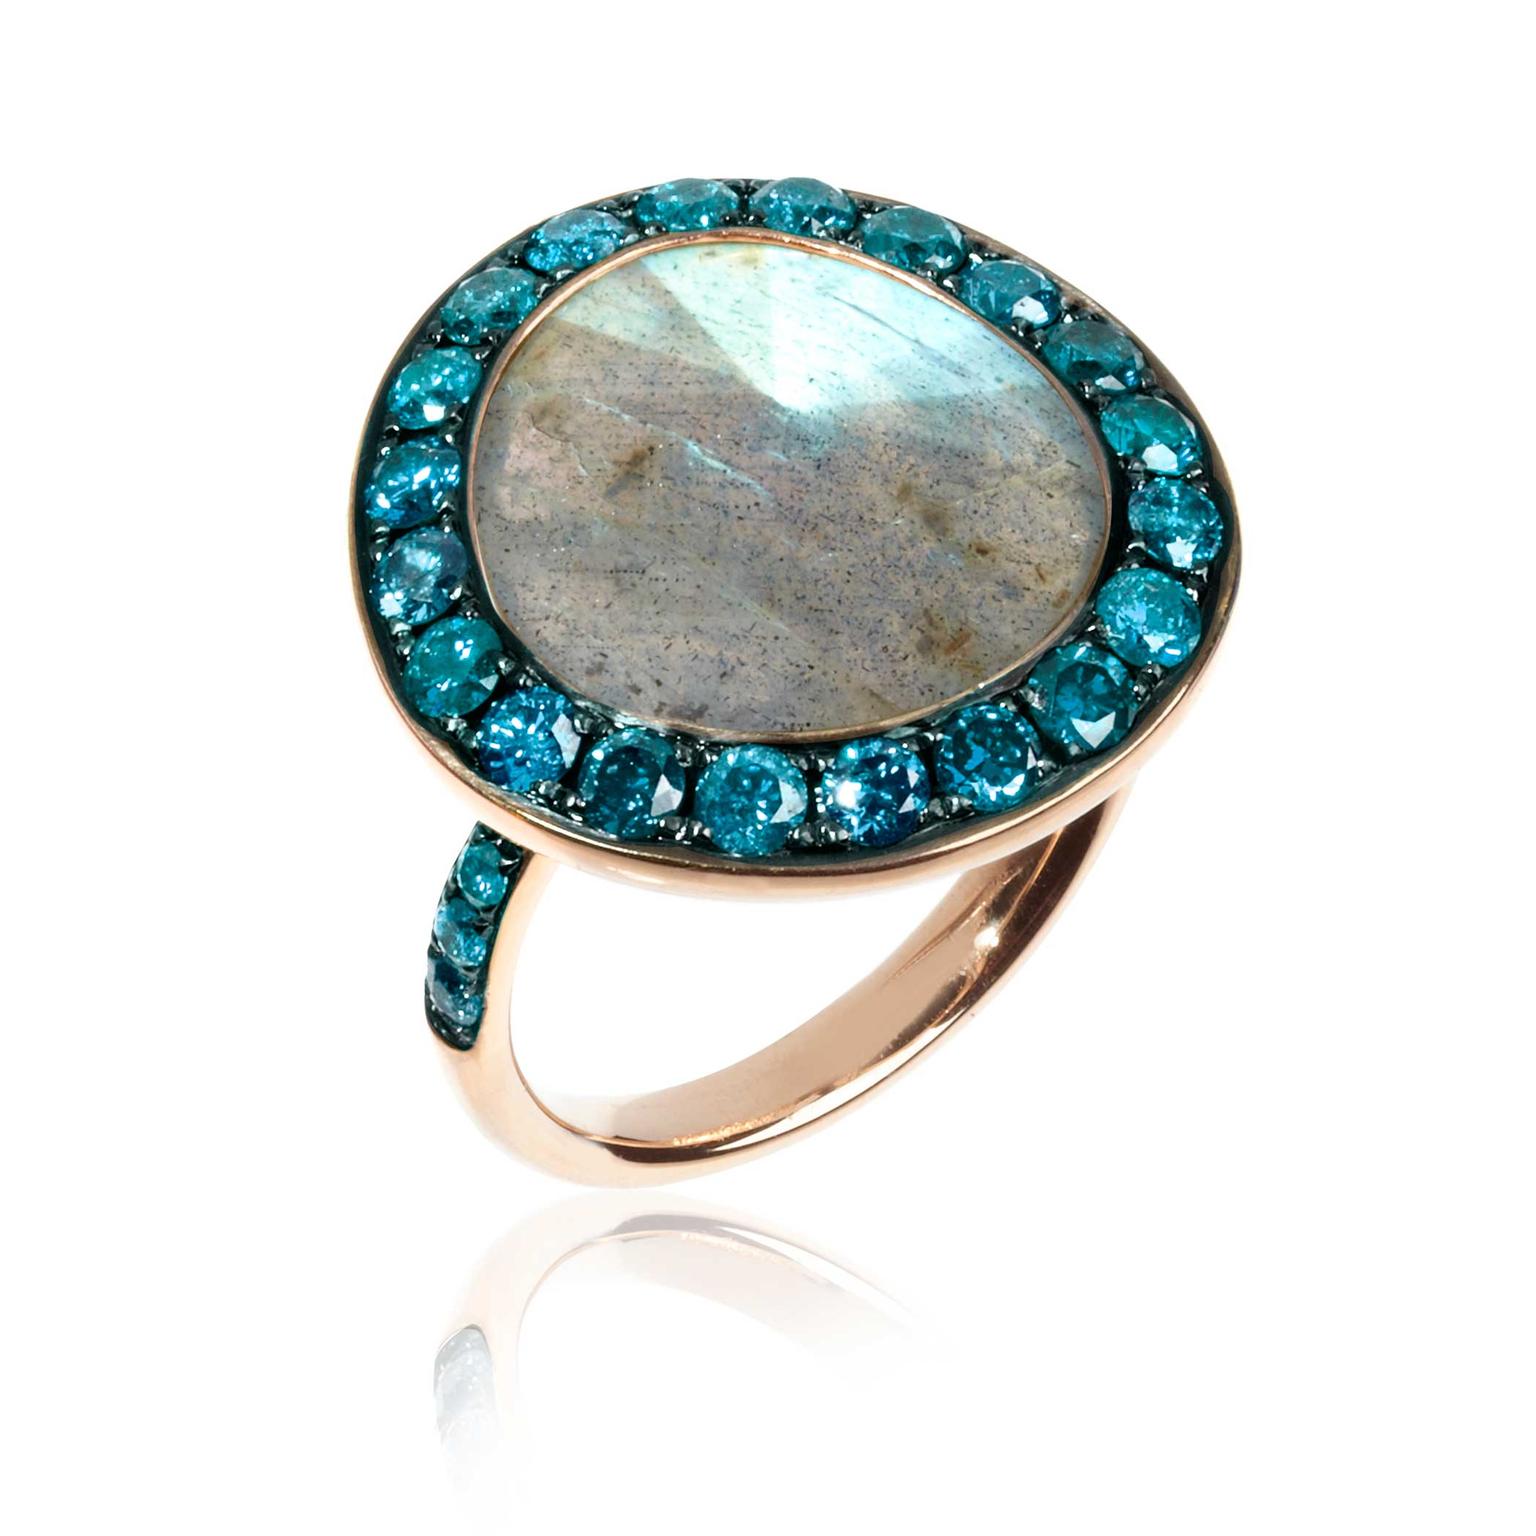 Large Annoushka labradorite ring in rose gold with blue pavé diamonds